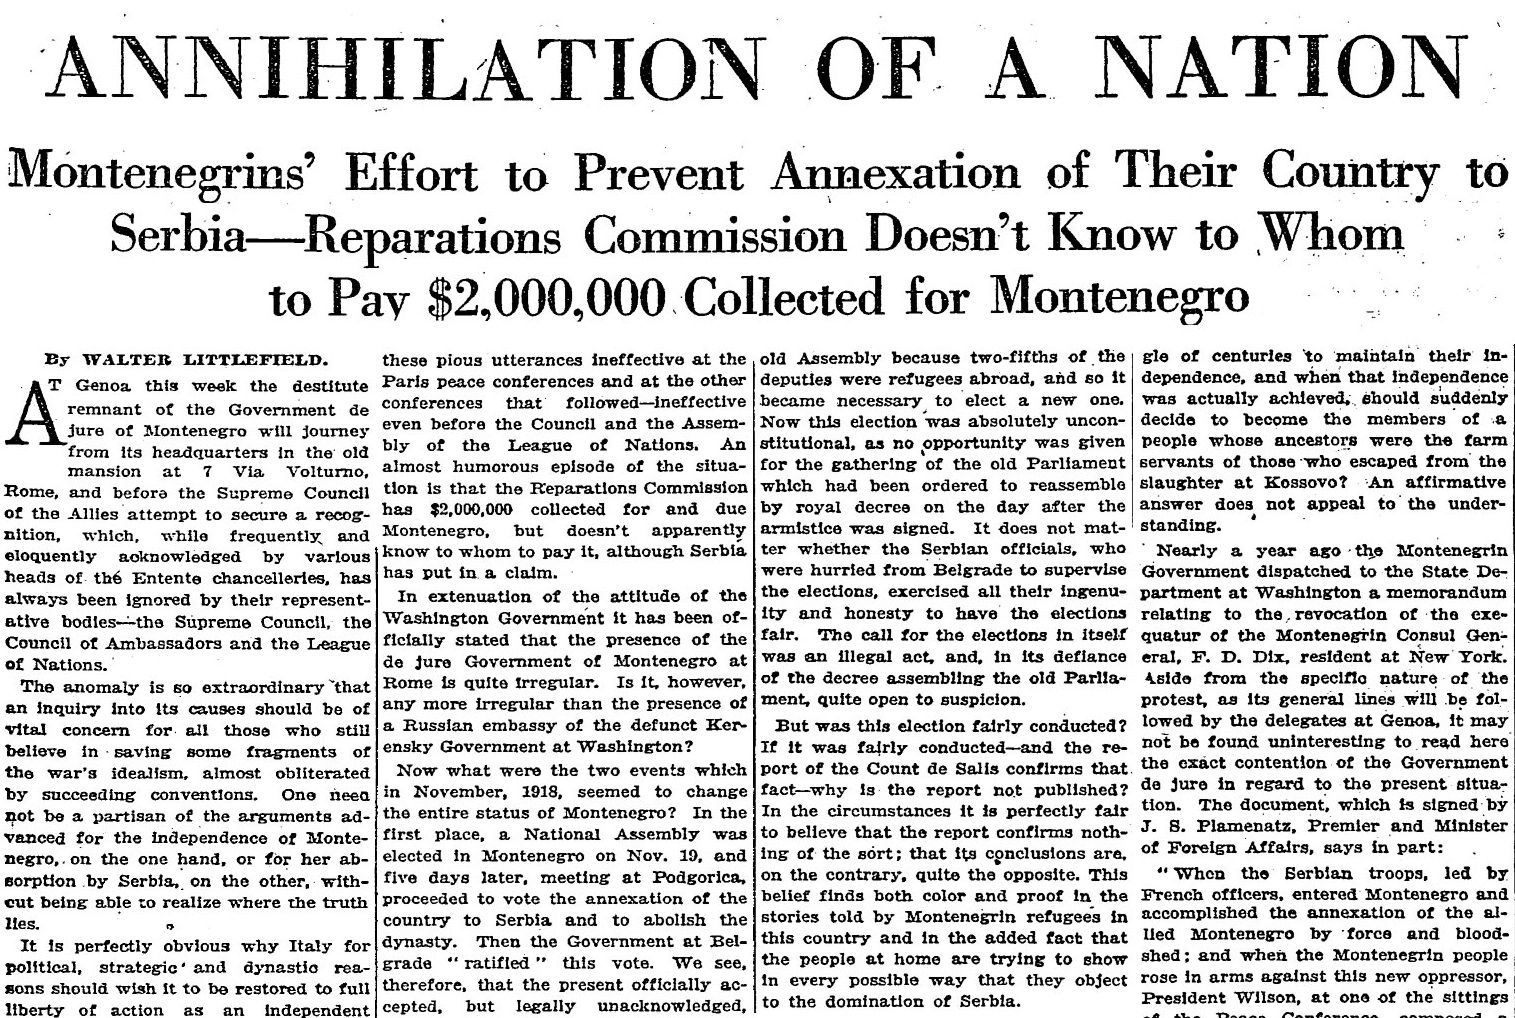 1922 ANNIHILATION OF A NATION 001 1